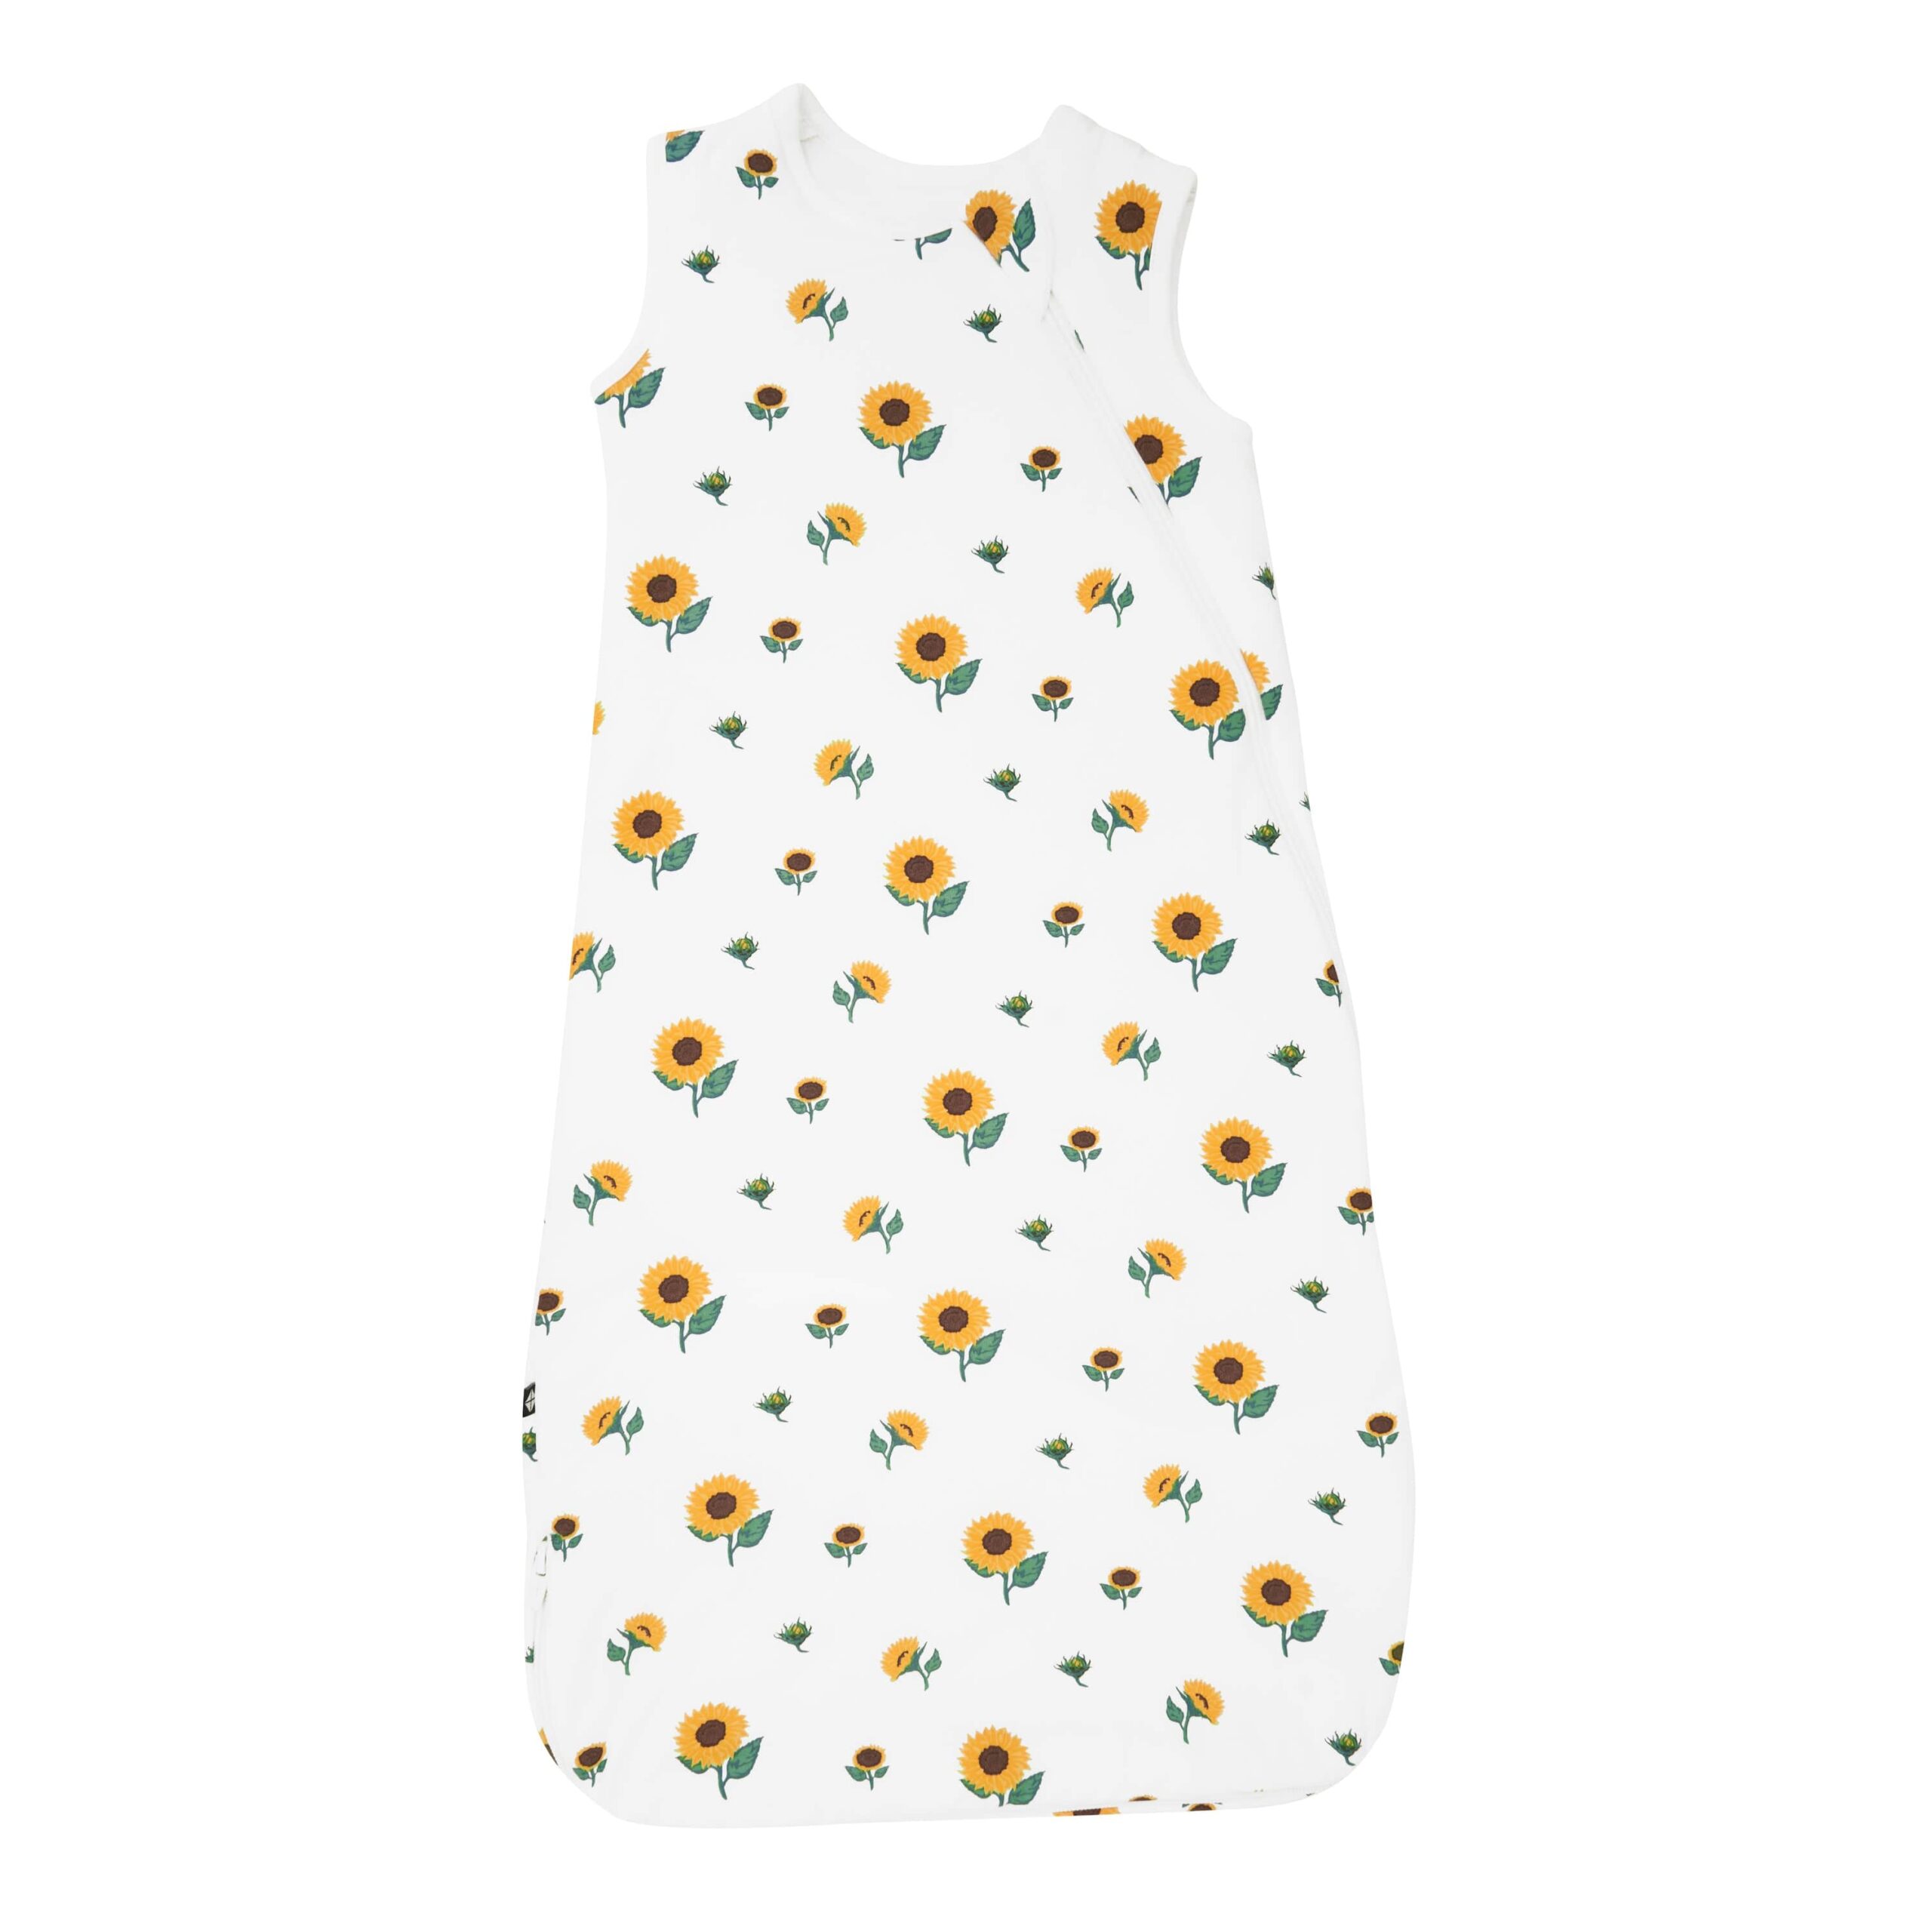 Kyte BABY Sleep Bag in Sunflower 1.0 TOG – Blossom